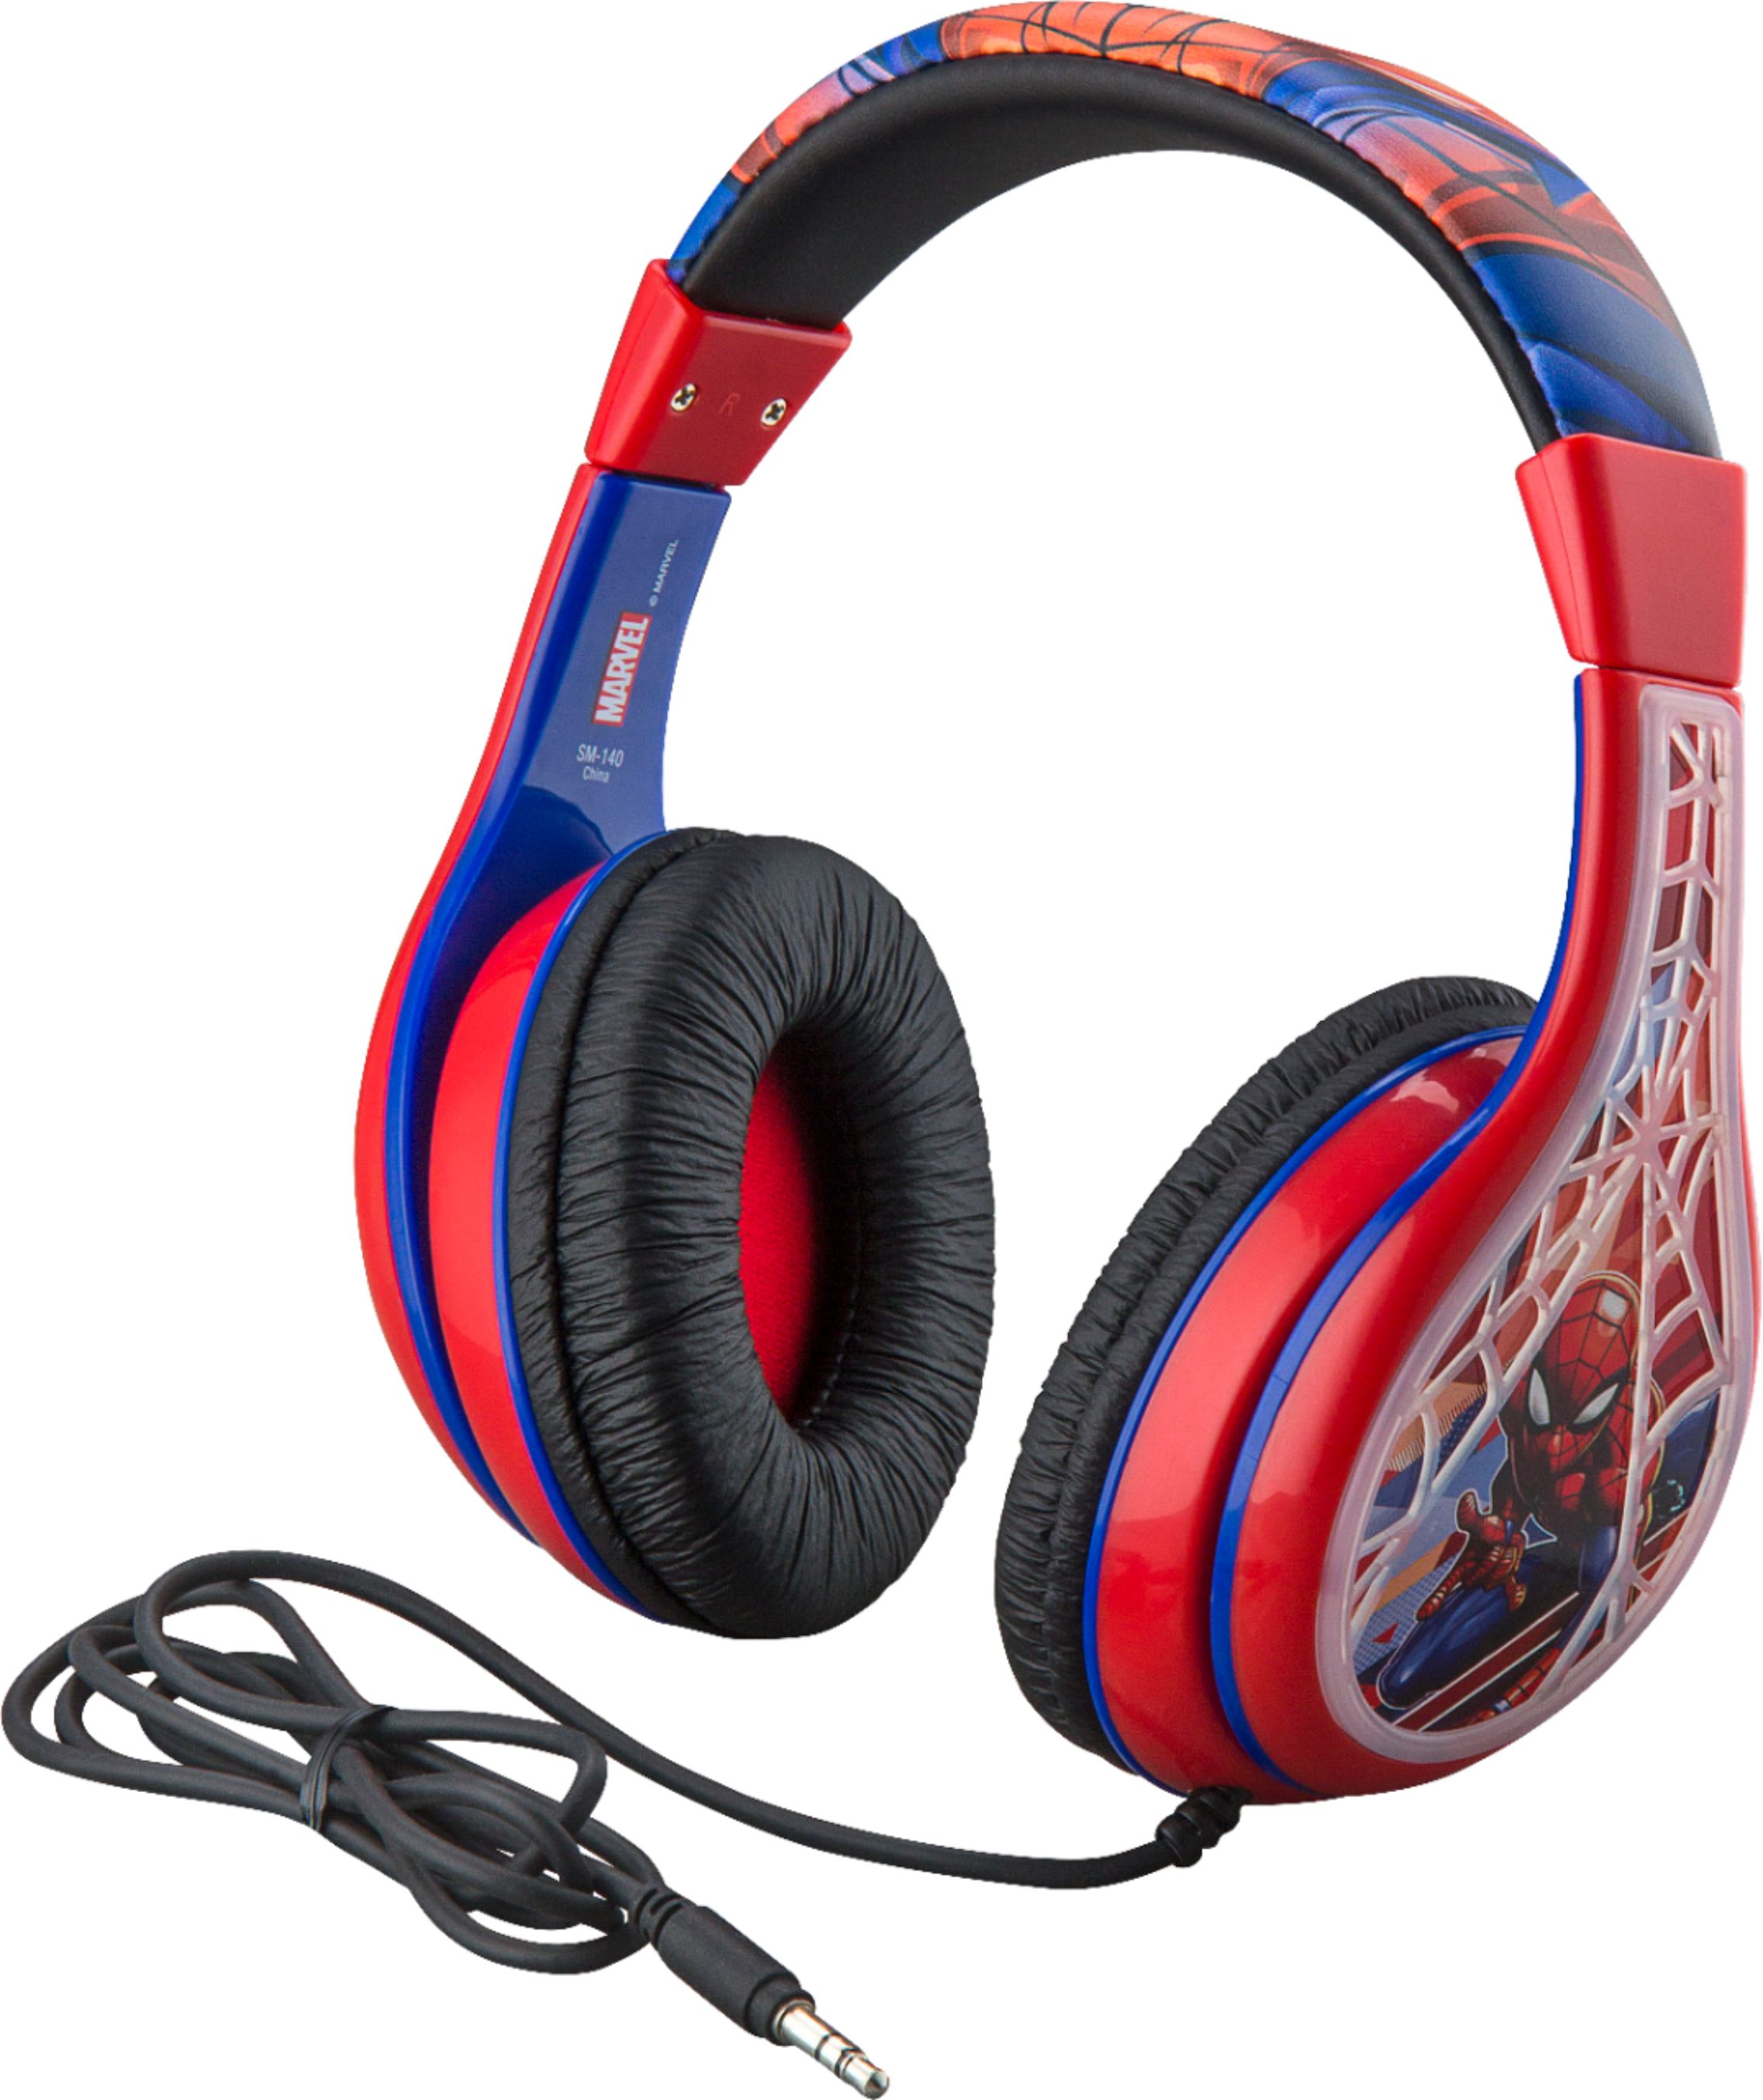 Left View: eKids - Marvel Spider-Man Wired Over-the-Ear Headphones - Red/Blue/Black